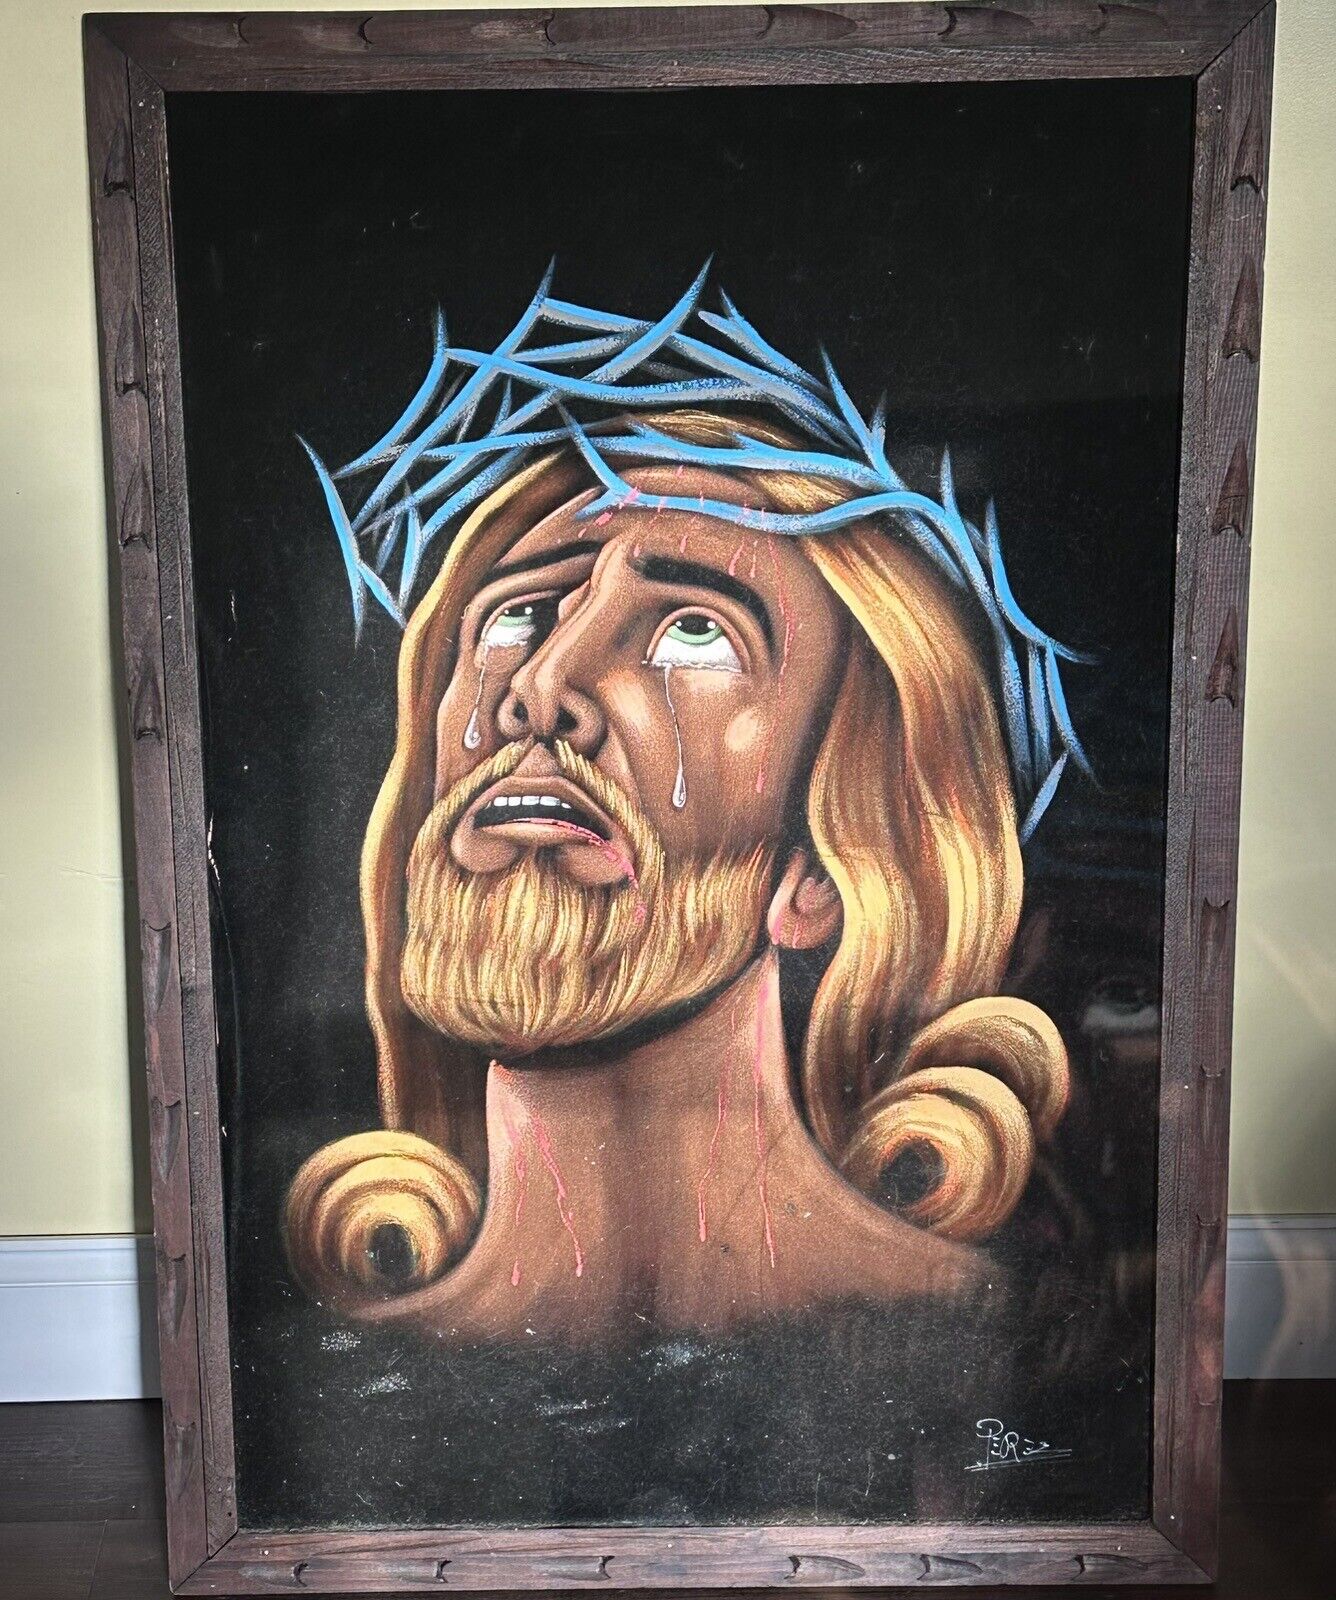 Black Velvet Jesus Painting Signed And Stunningly Beautiful